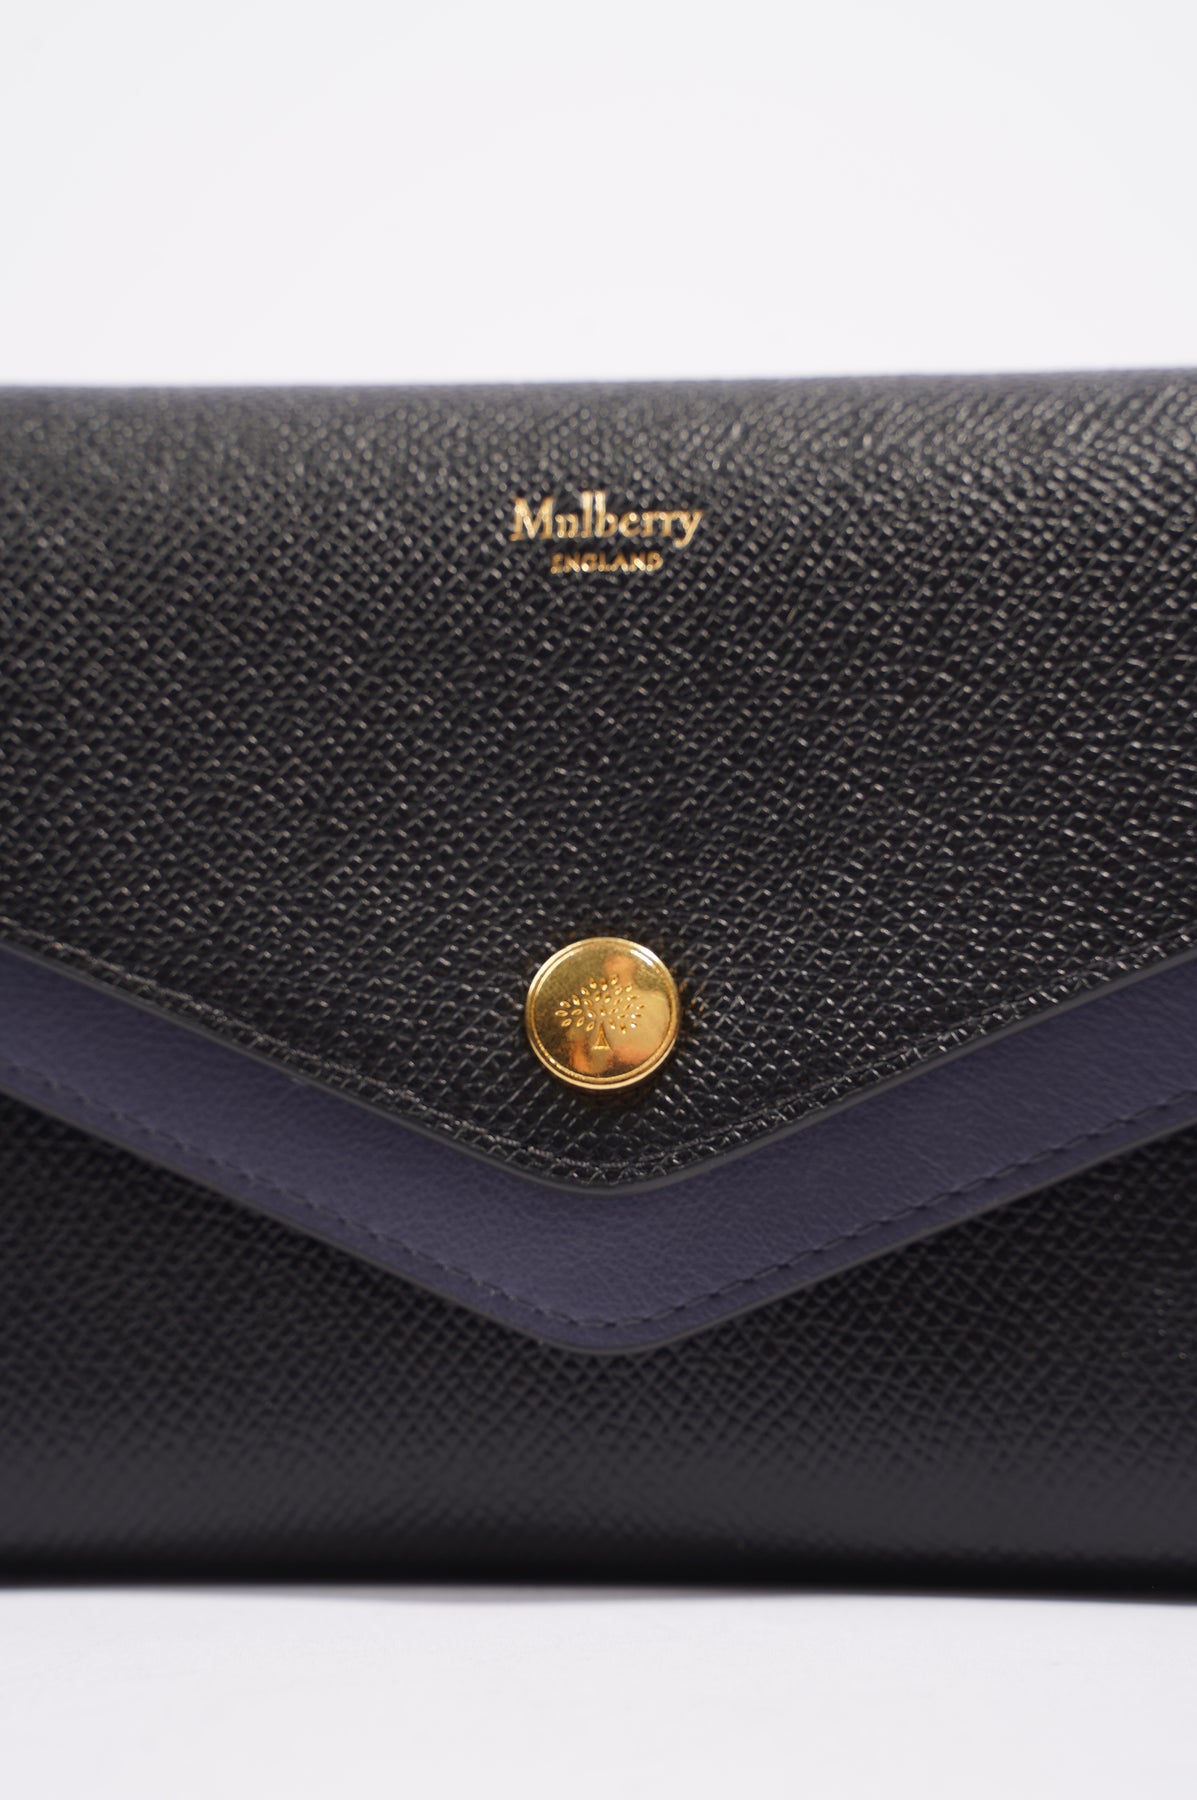 Louis Vuitton Twist Shoulder bag in Black Epi Leather - ShopStyle